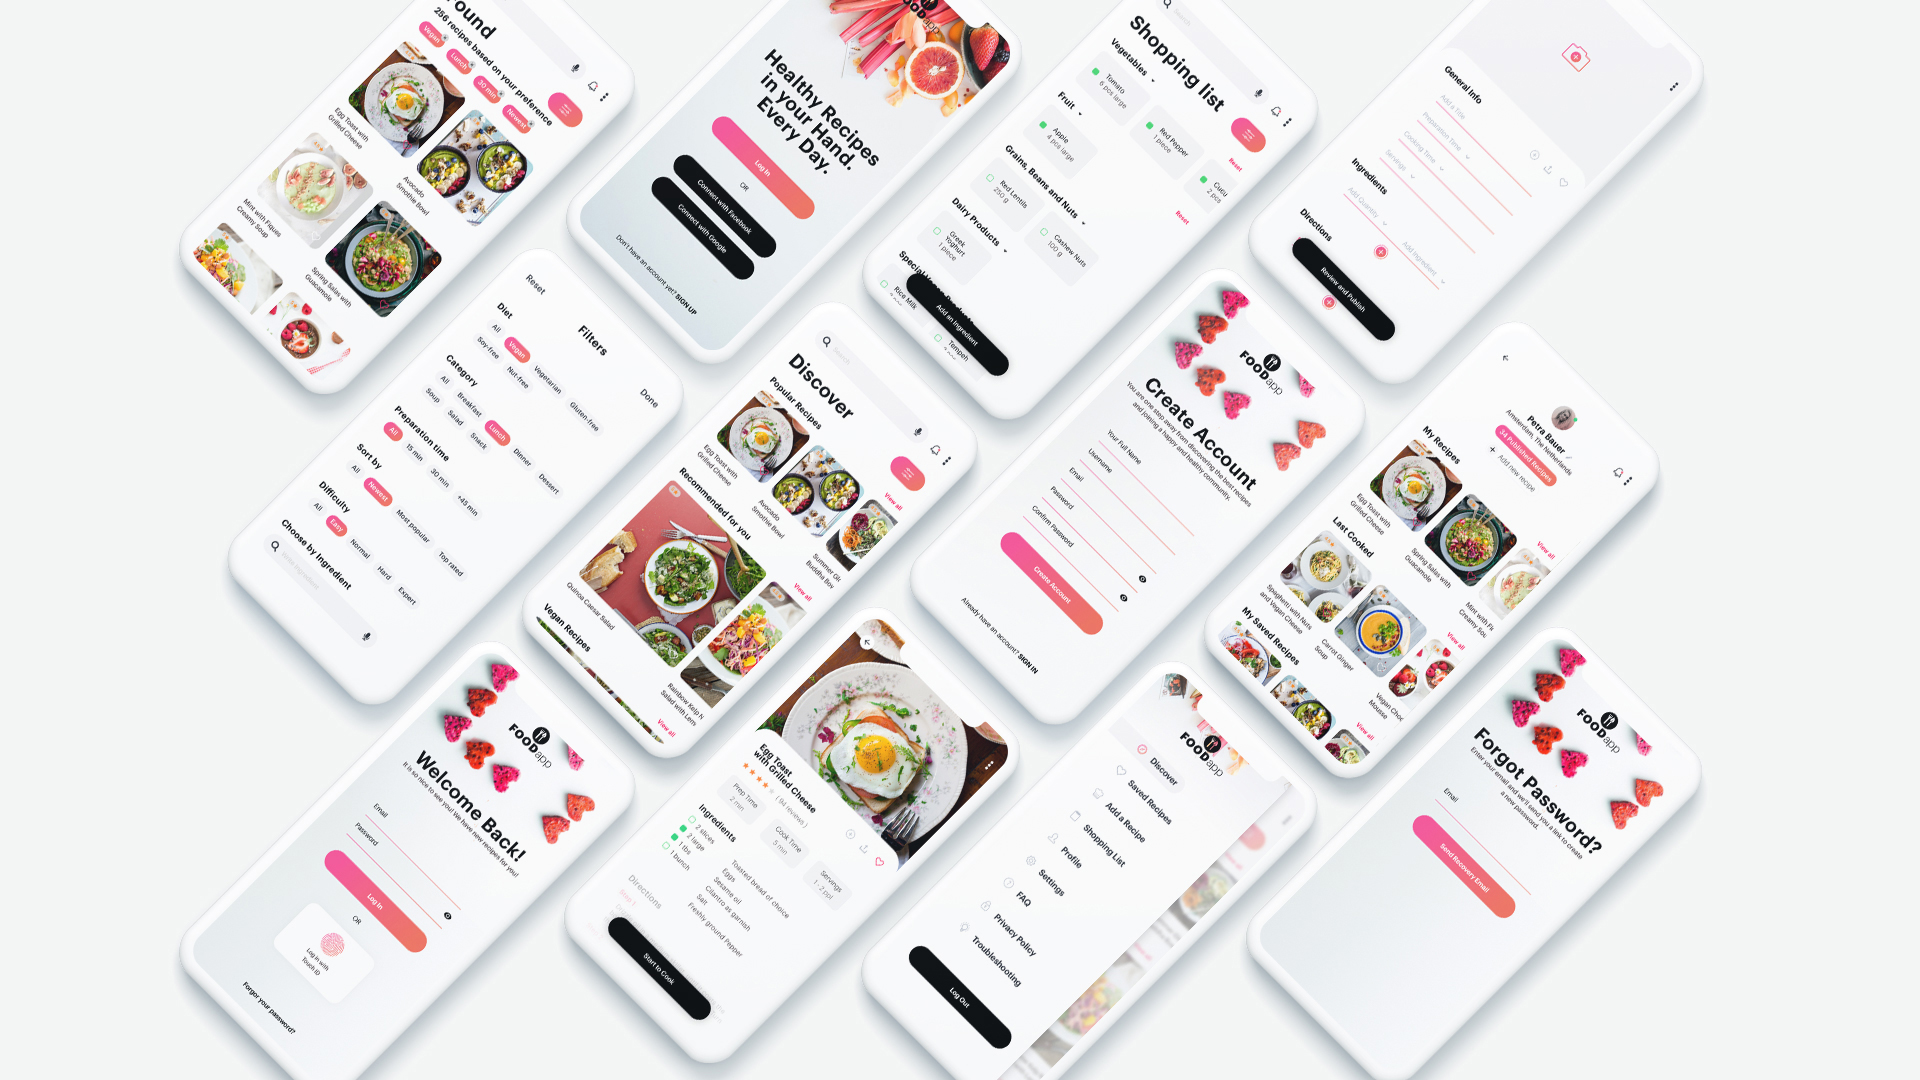 Food App overview